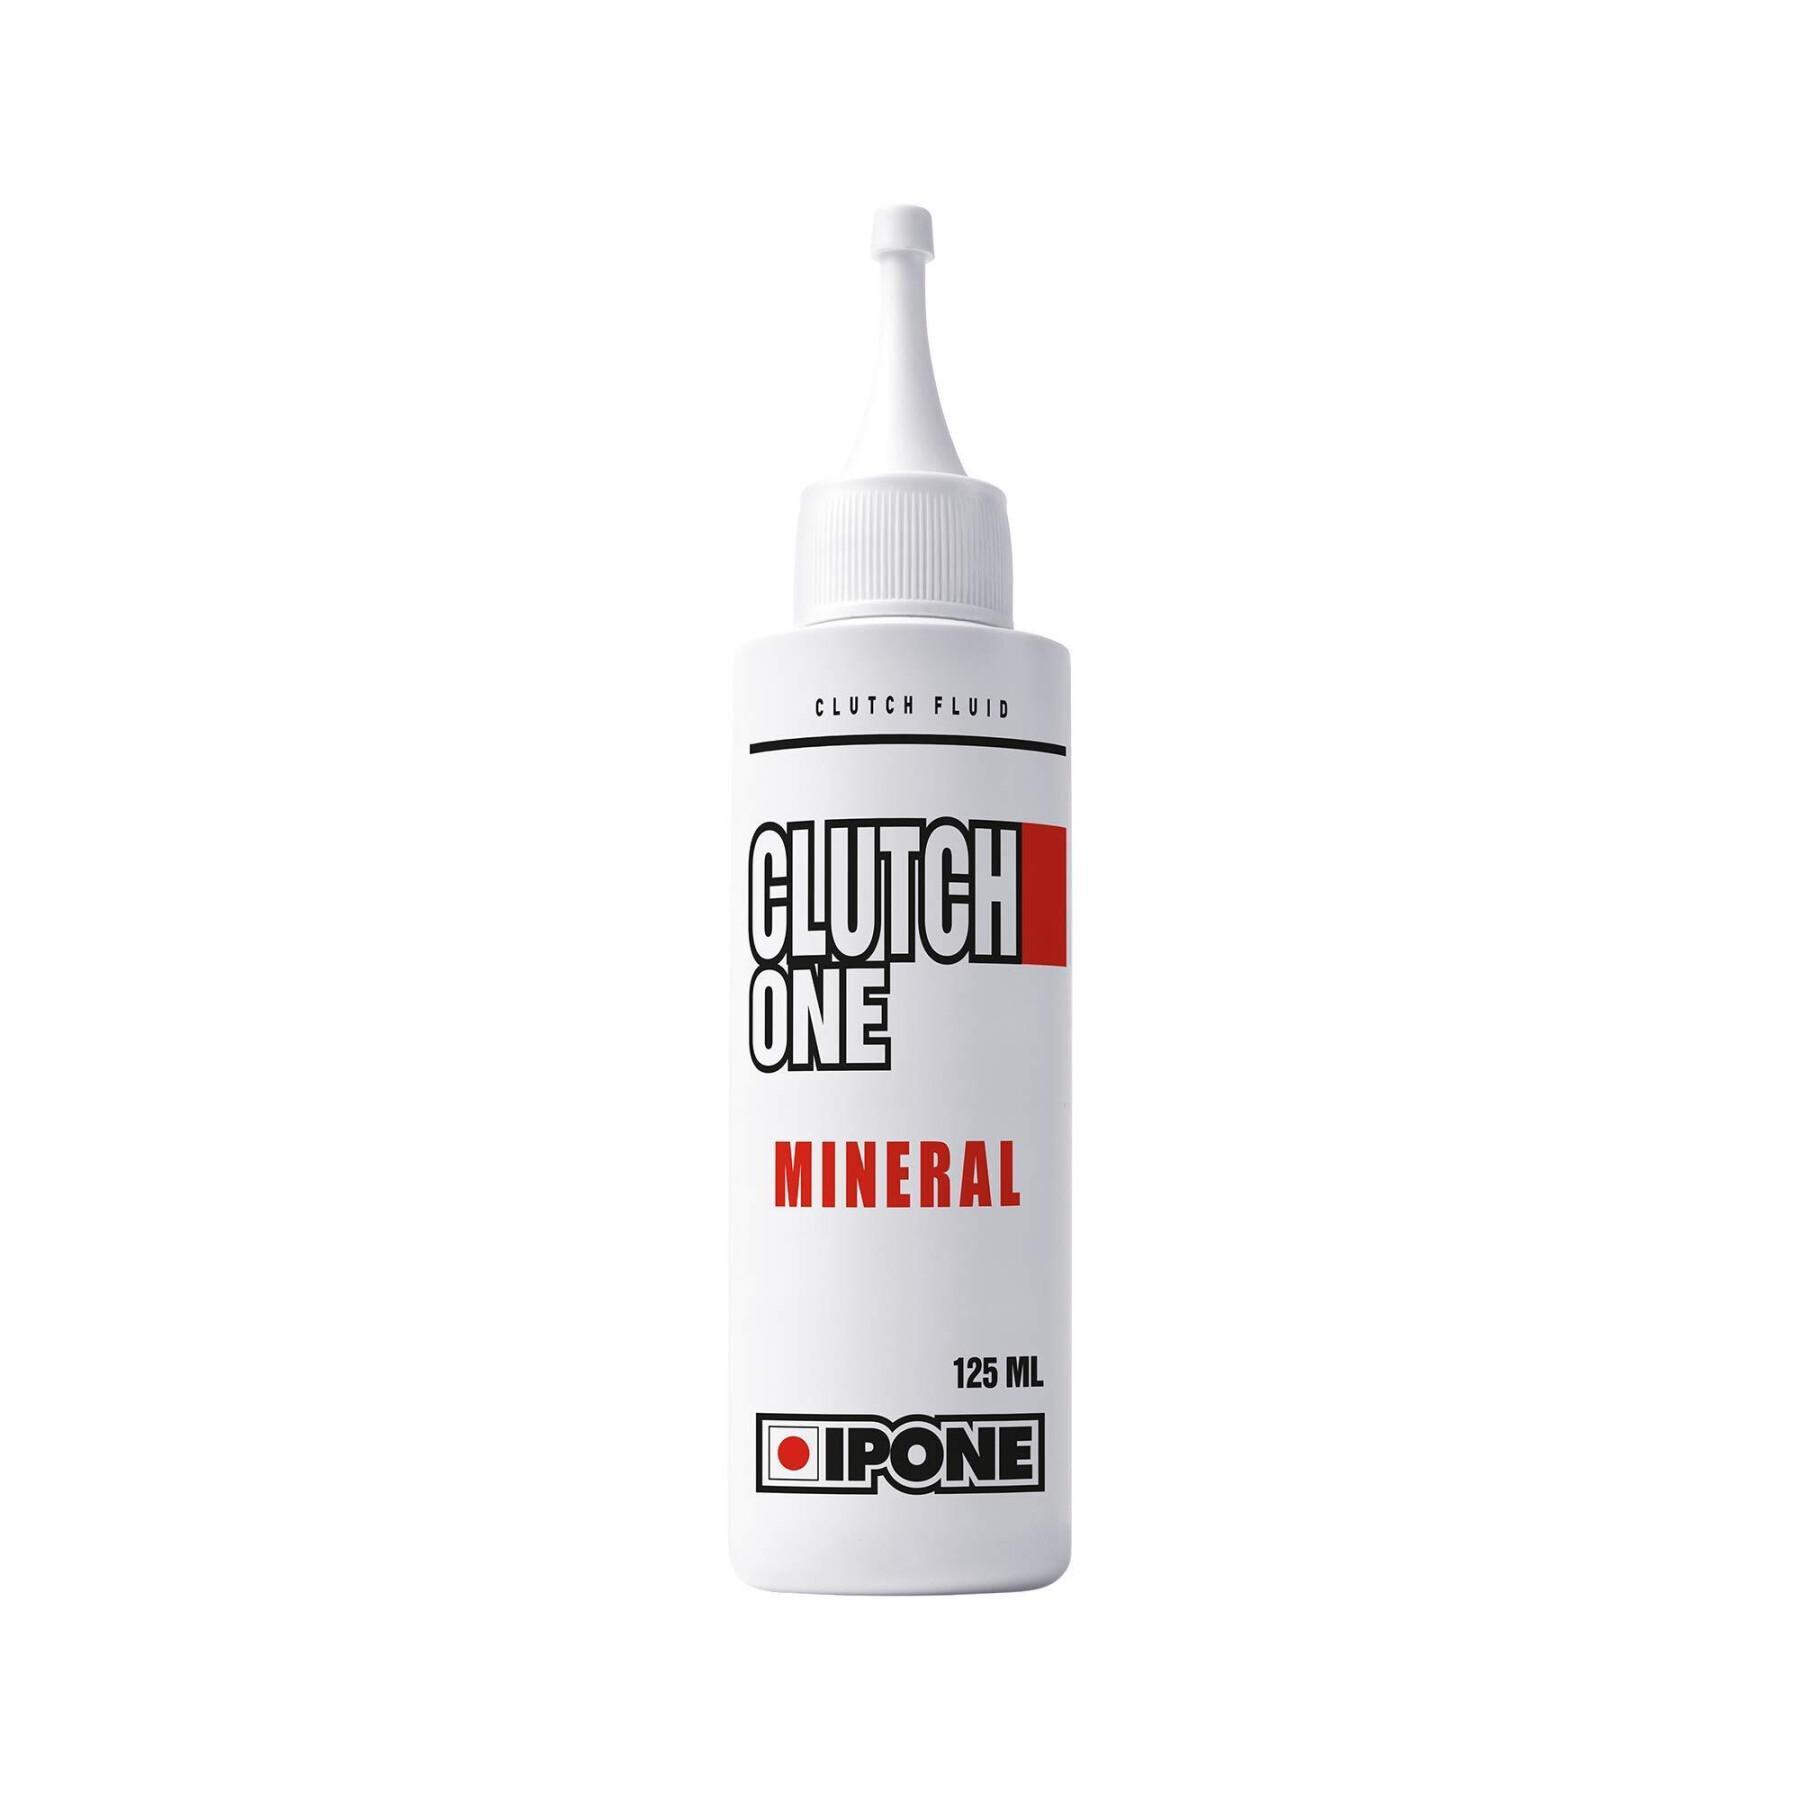 Clutch oil ipone clutch one